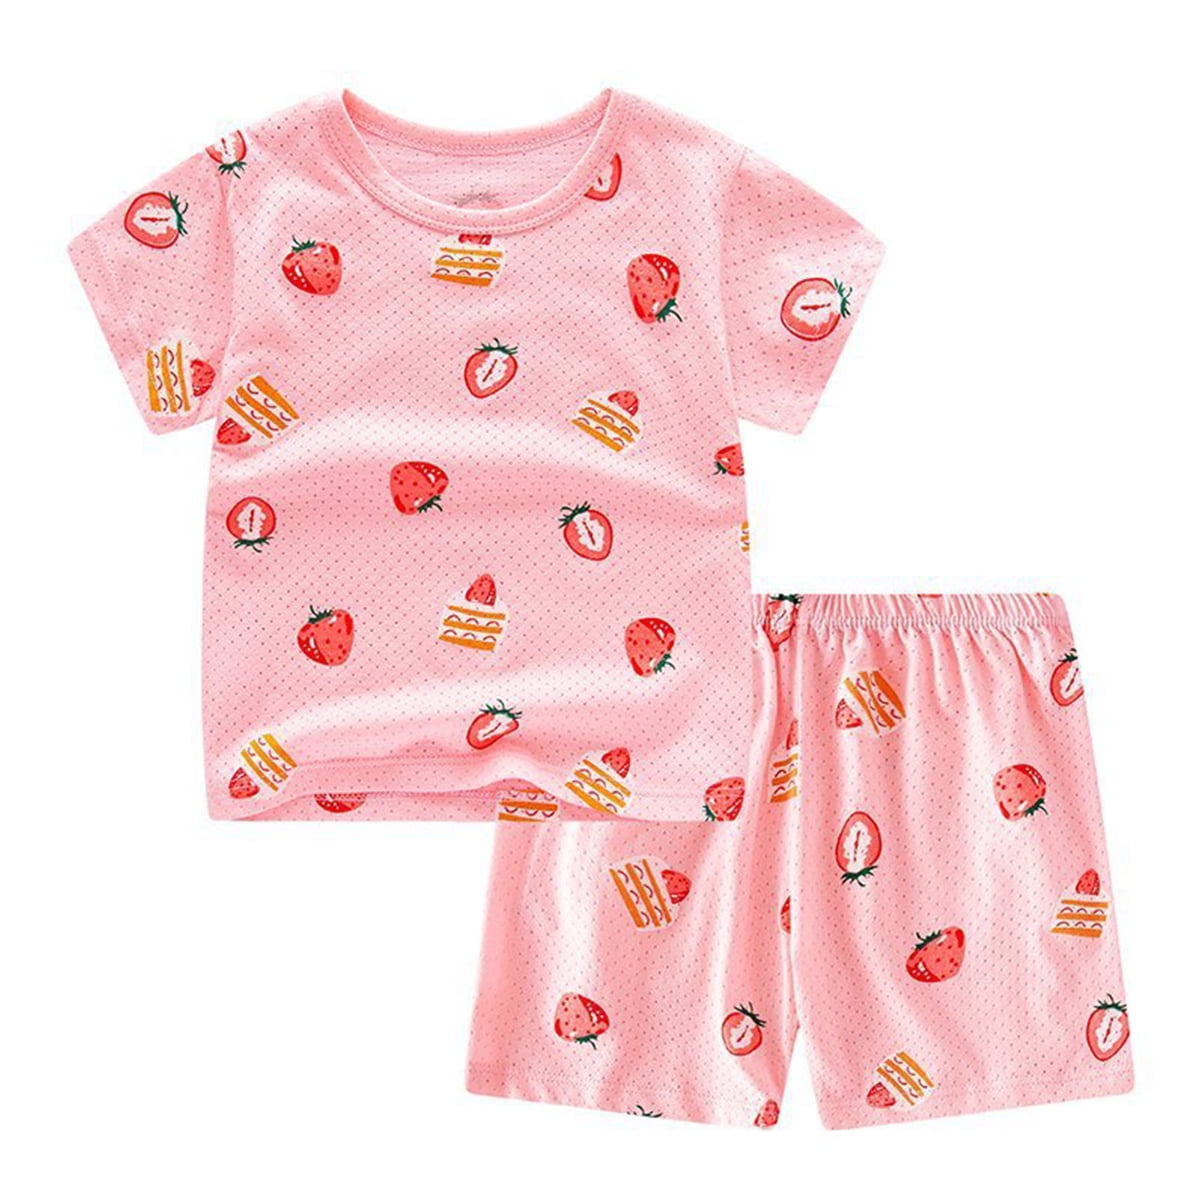 Kids Boys Girls Soft Pyjamas Sleepwear Pink Nightwear PJs Sets Sizes 7-13 yrs 